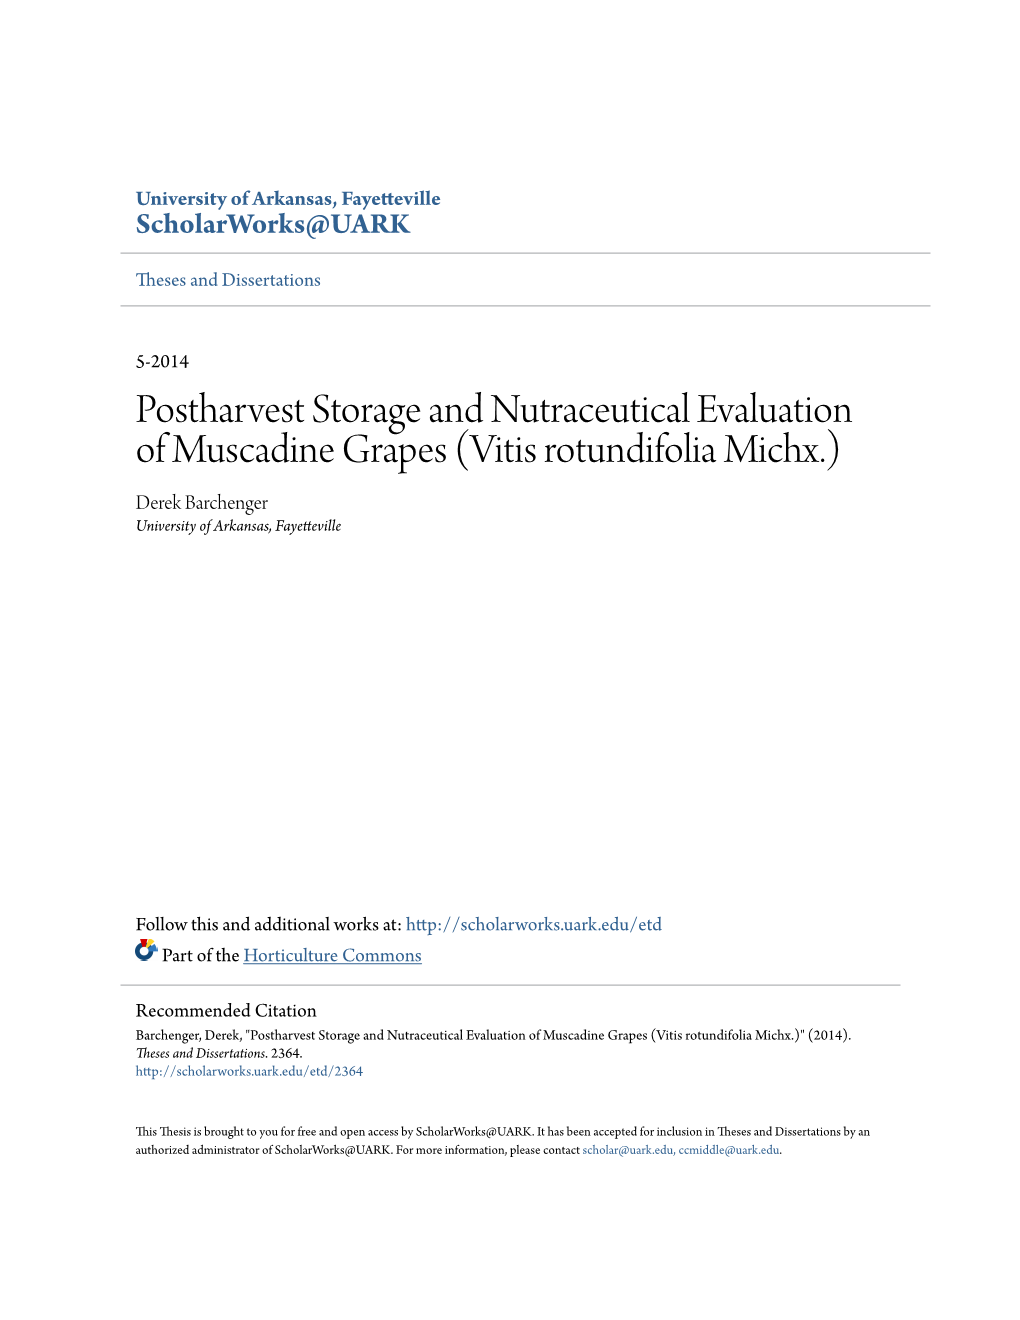 Postharvest Storage and Nutraceutical Evaluation of Muscadine Grapes (Vitis Rotundifolia Michx.) Derek Barchenger University of Arkansas, Fayetteville